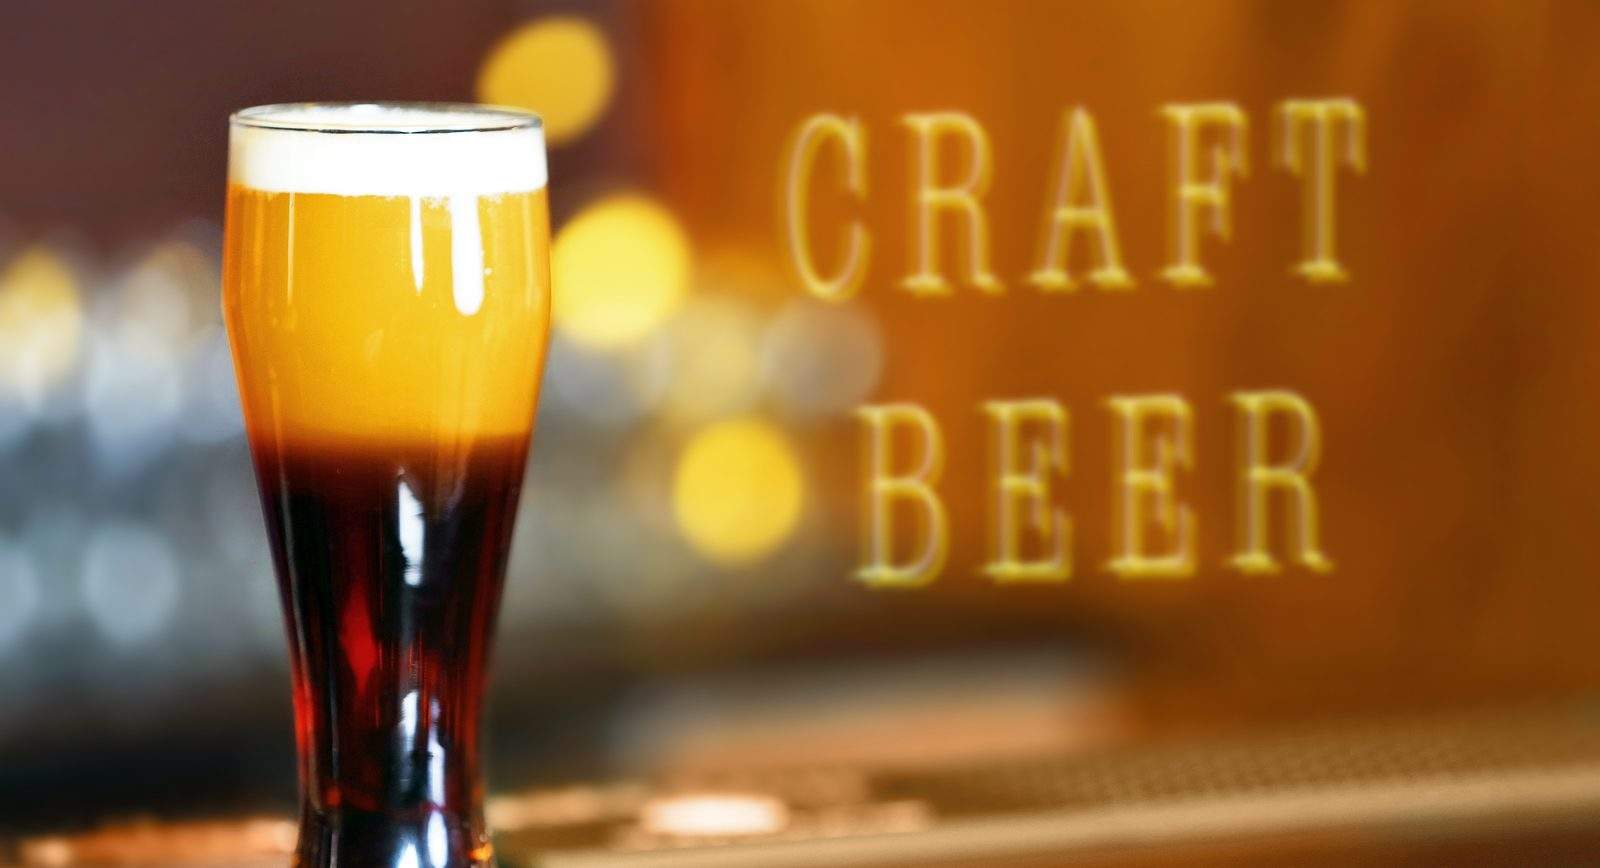 Craft beer, fresh beer